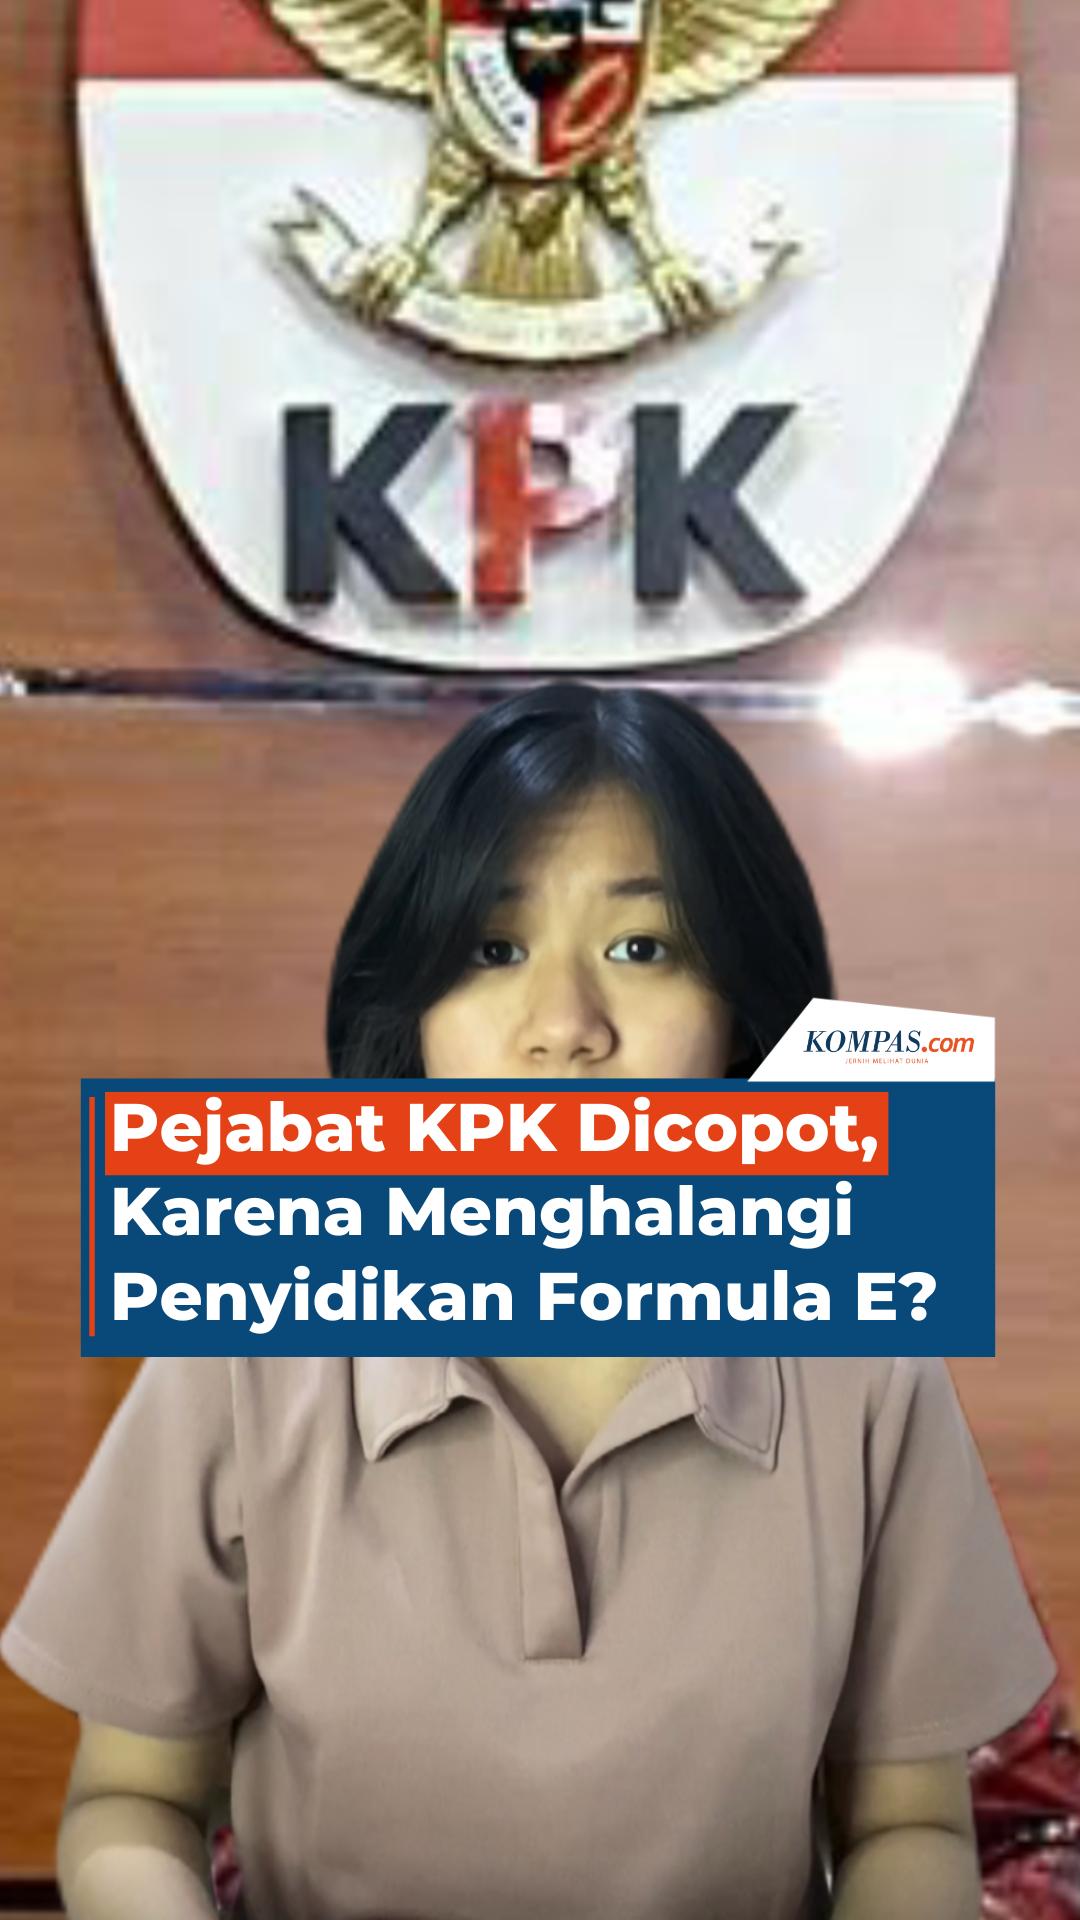 Pejabat KPK Dicopot, Karena Menghalangi Penyidikan Formula E?